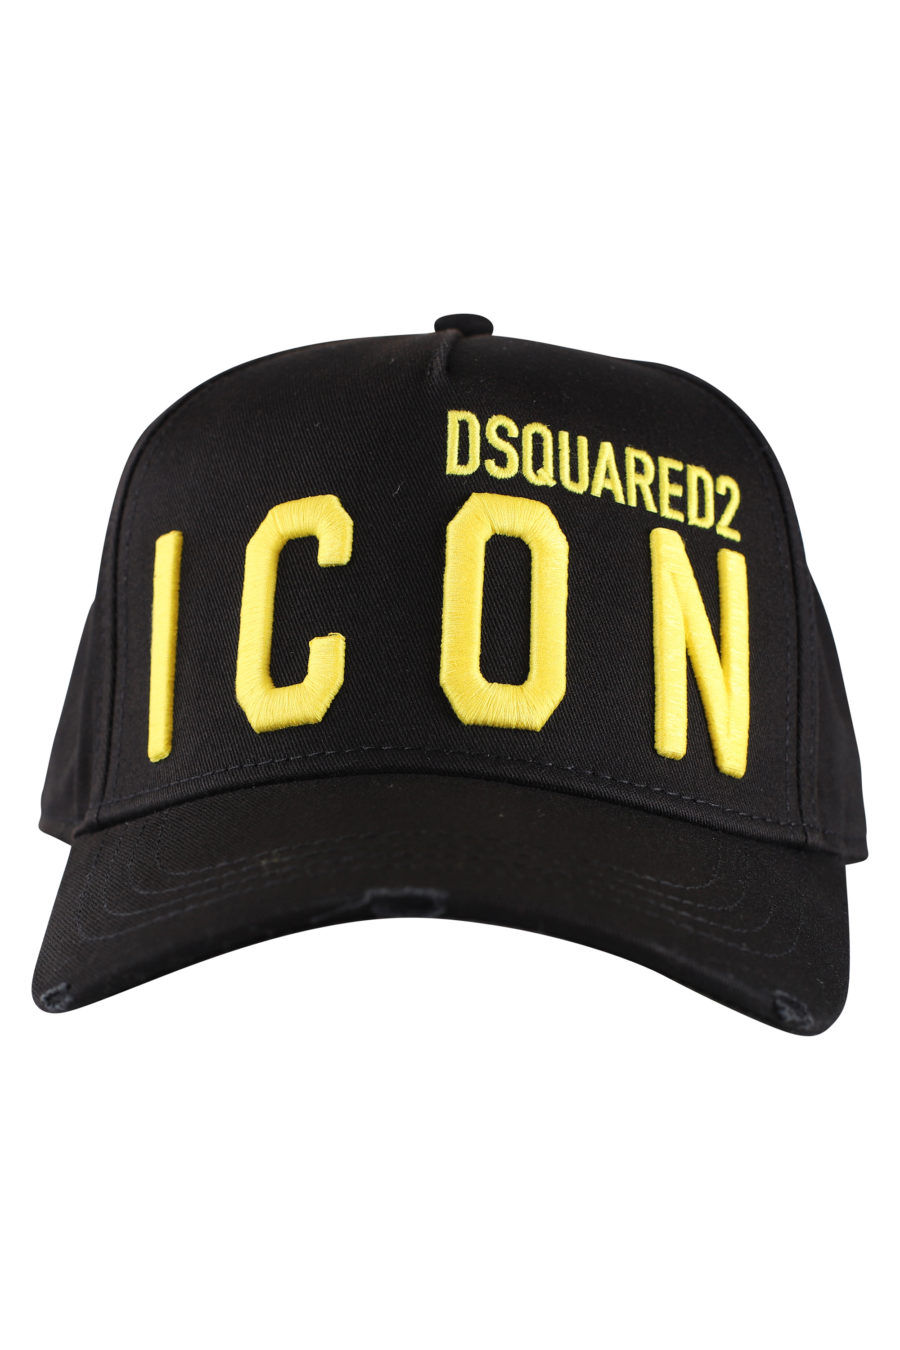 Adjustable black cap with yellow "icon" logo - IMG 9986